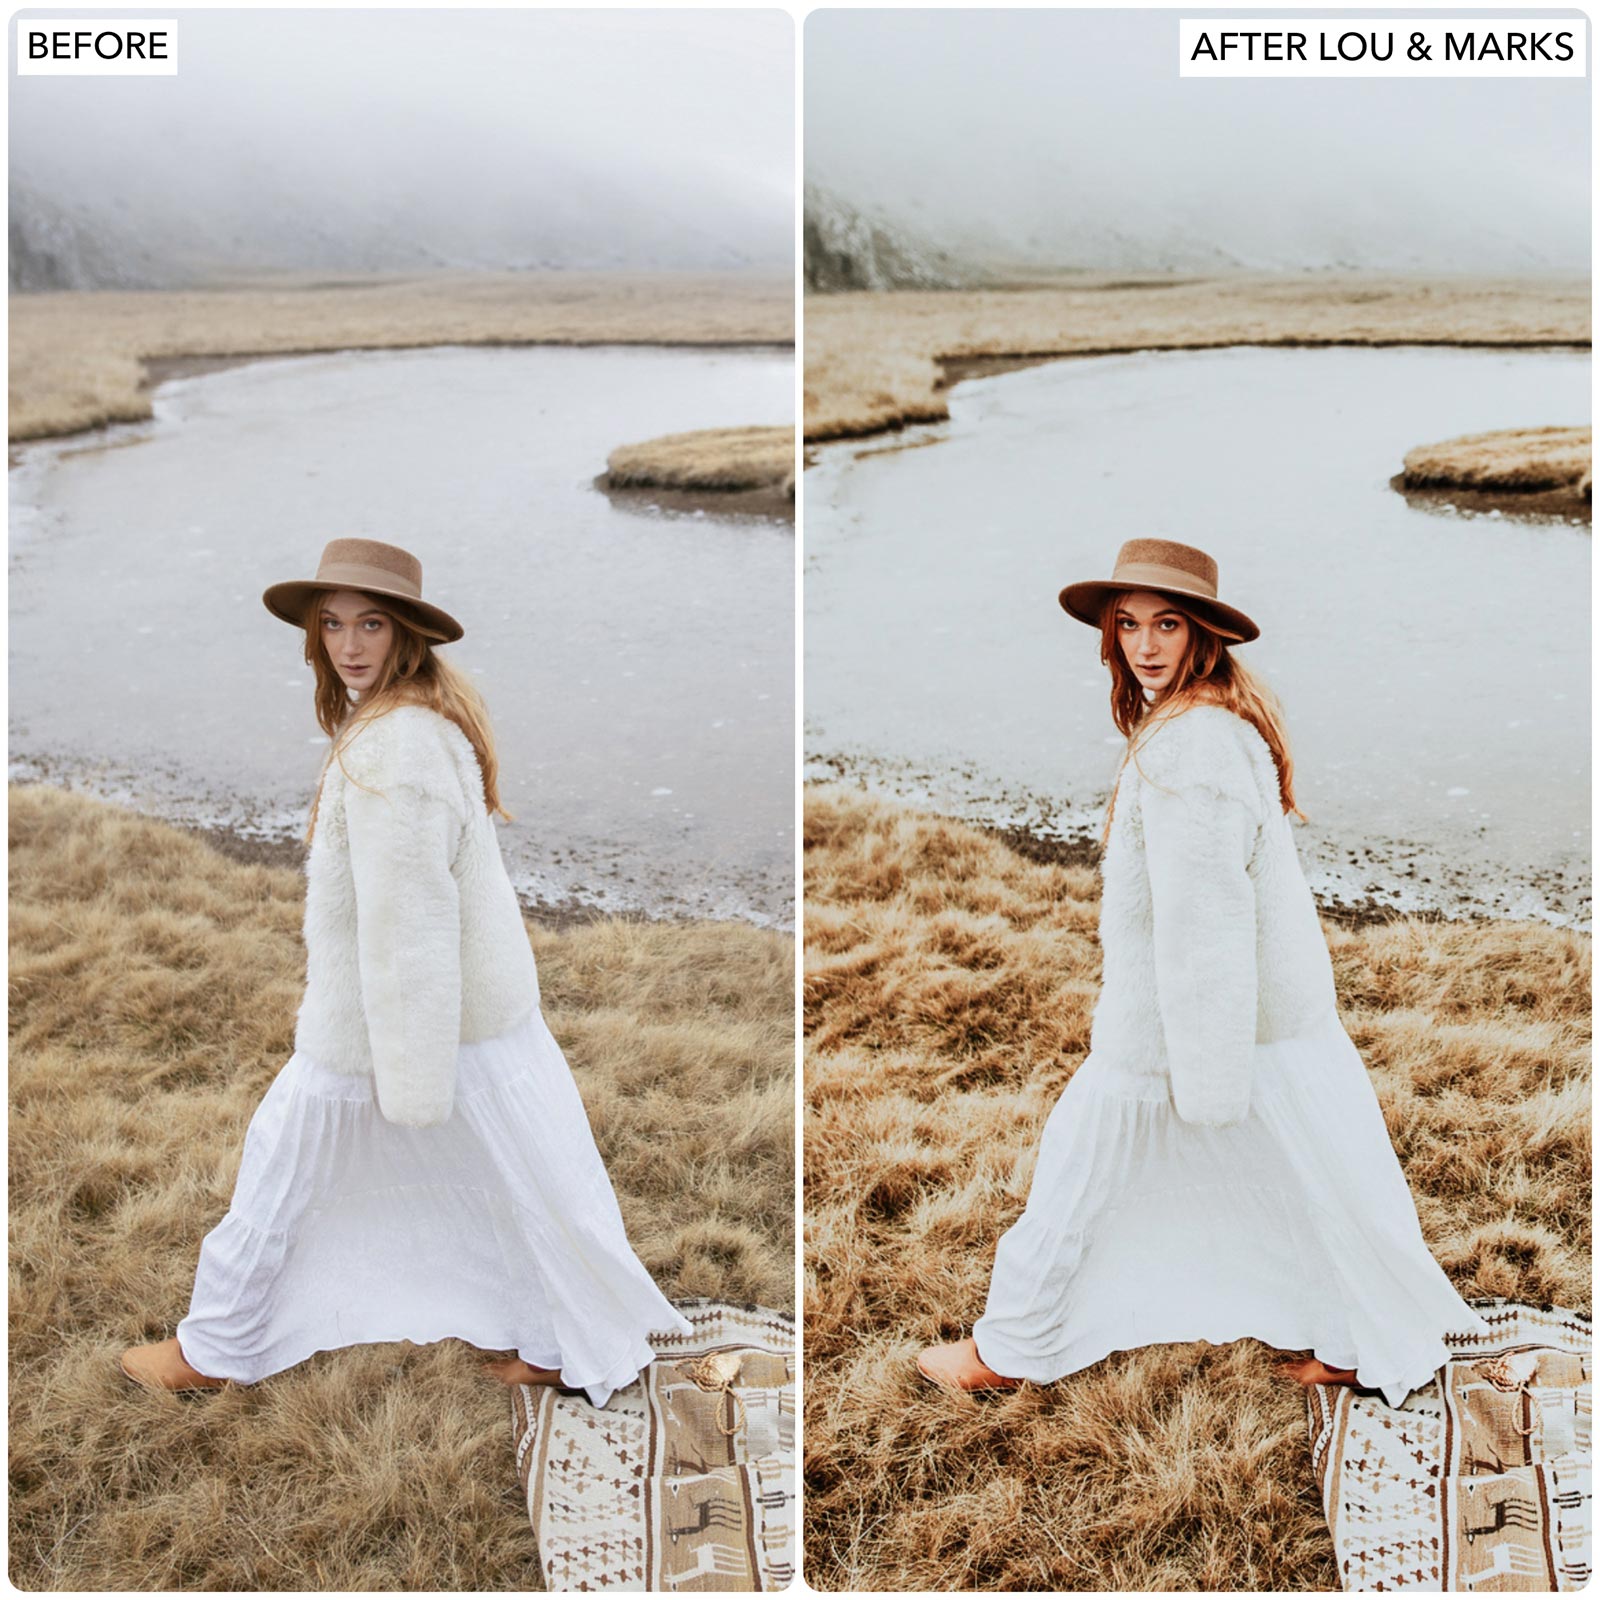 Before & After Muted  Lightroom Presets For Adobe Lightroom By Lou Marks Presets